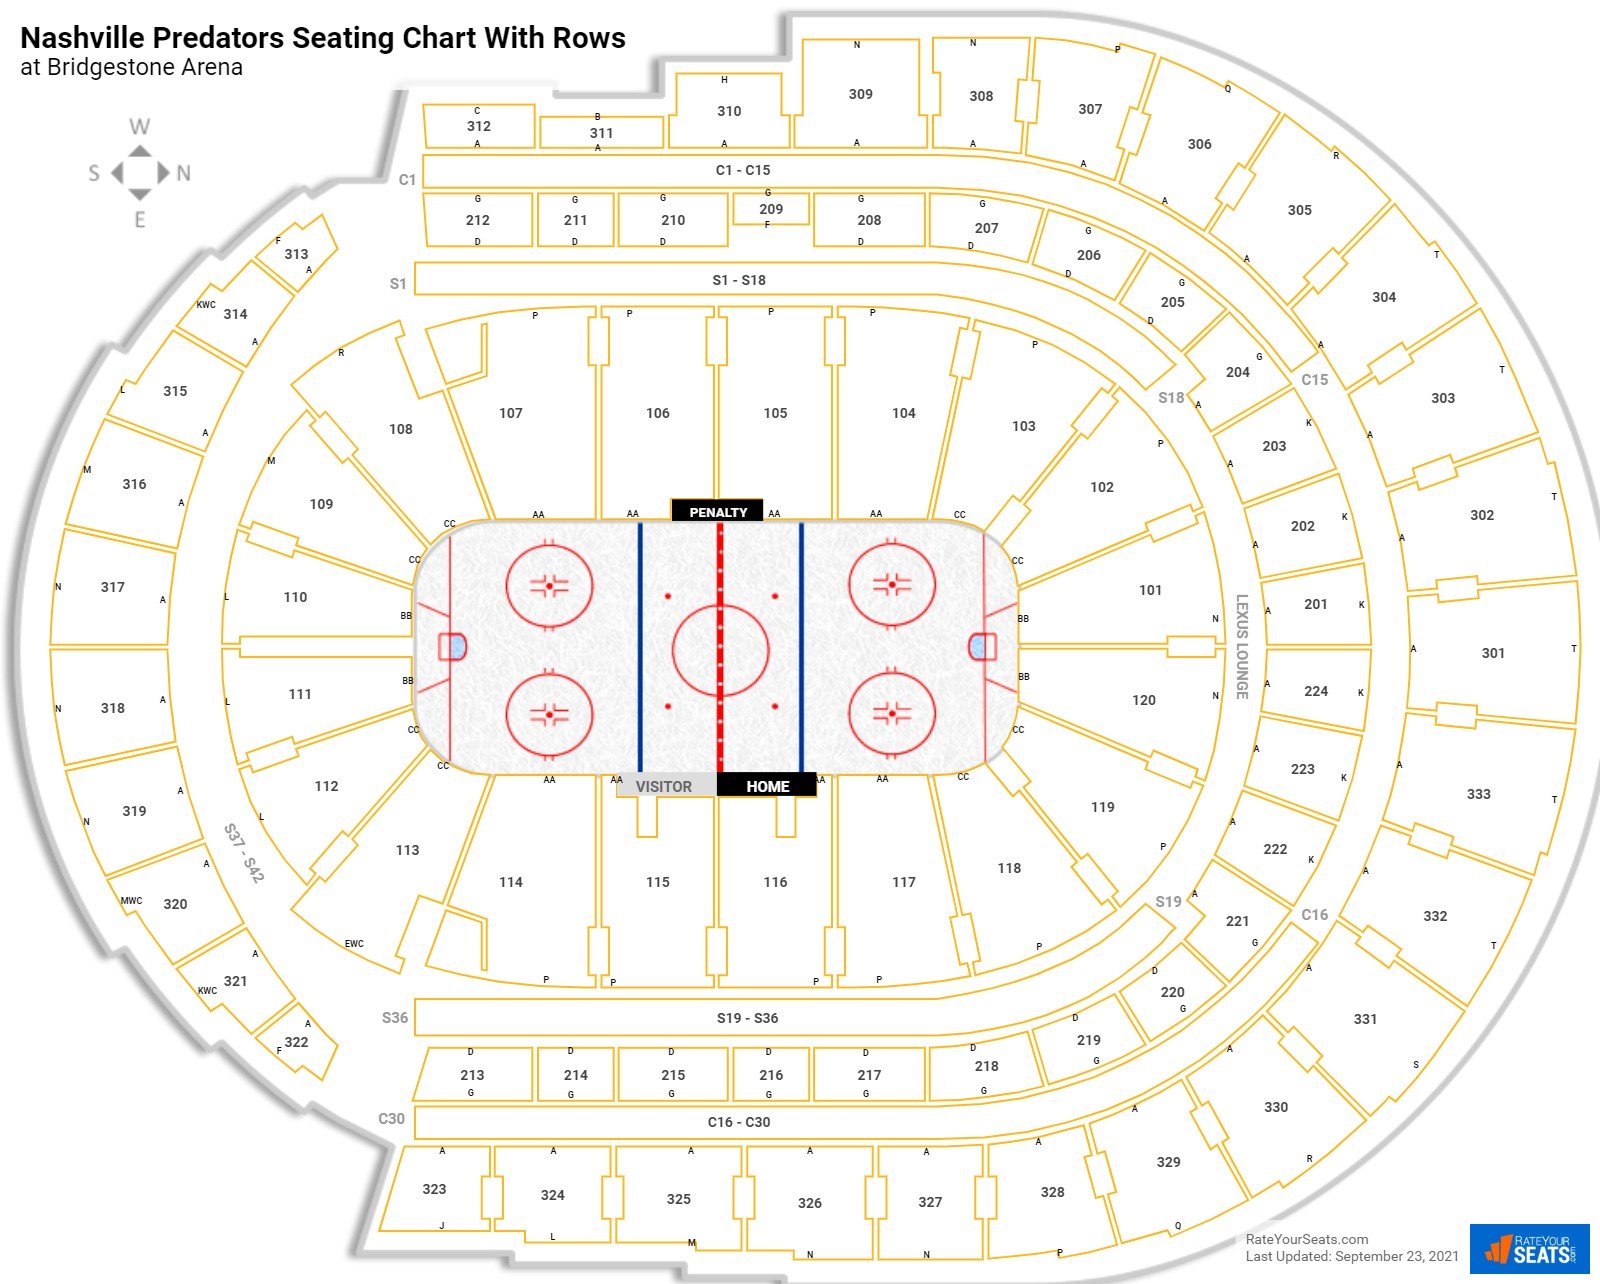 Bridgestone Arena seating chart with row numbers